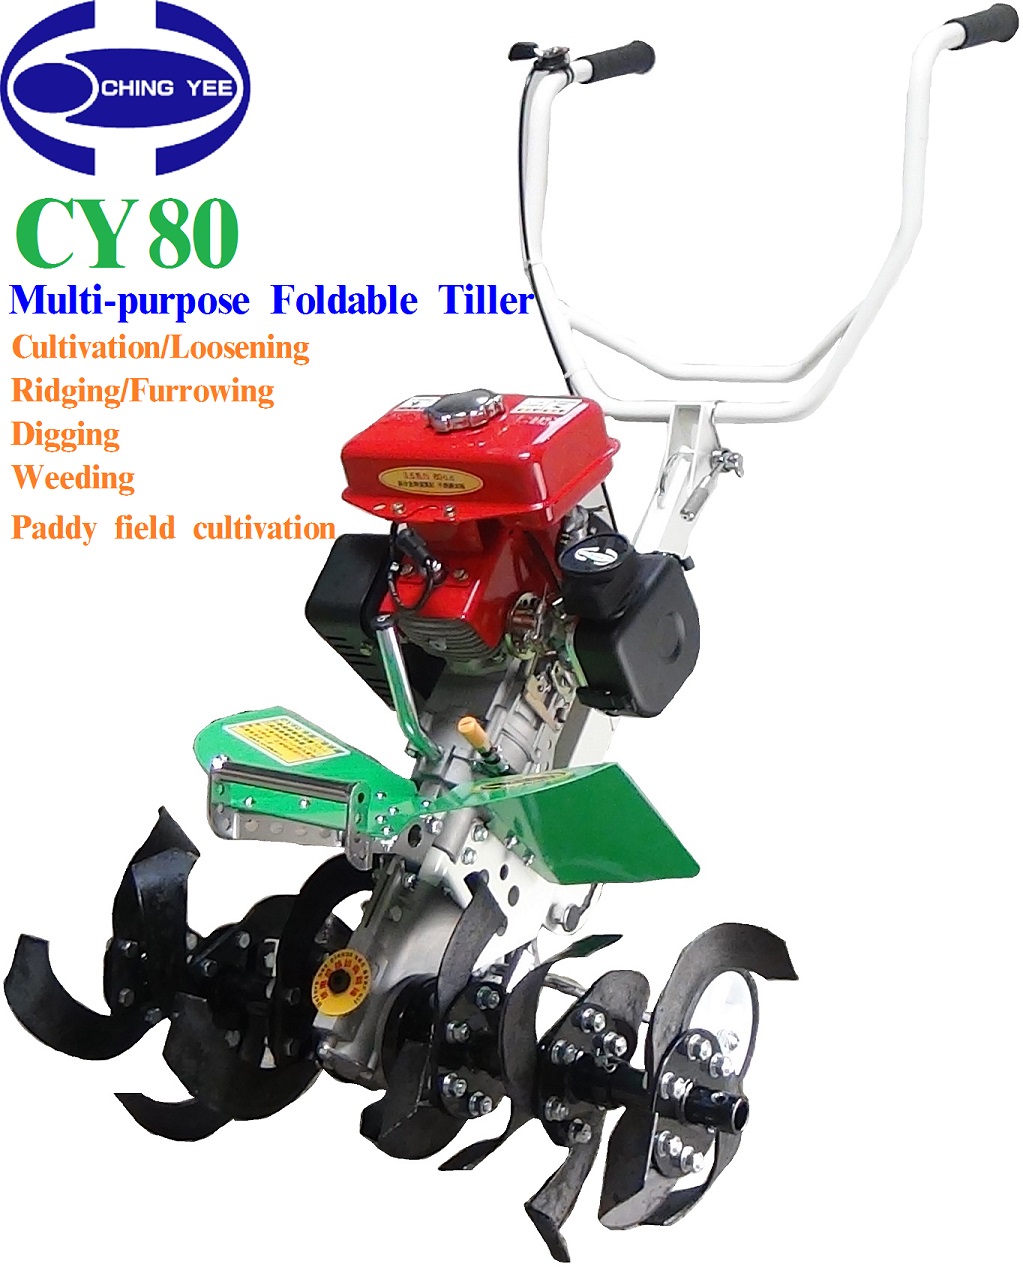 CY80 Multi-purpose Power tiller/Cultivator Made in Korea